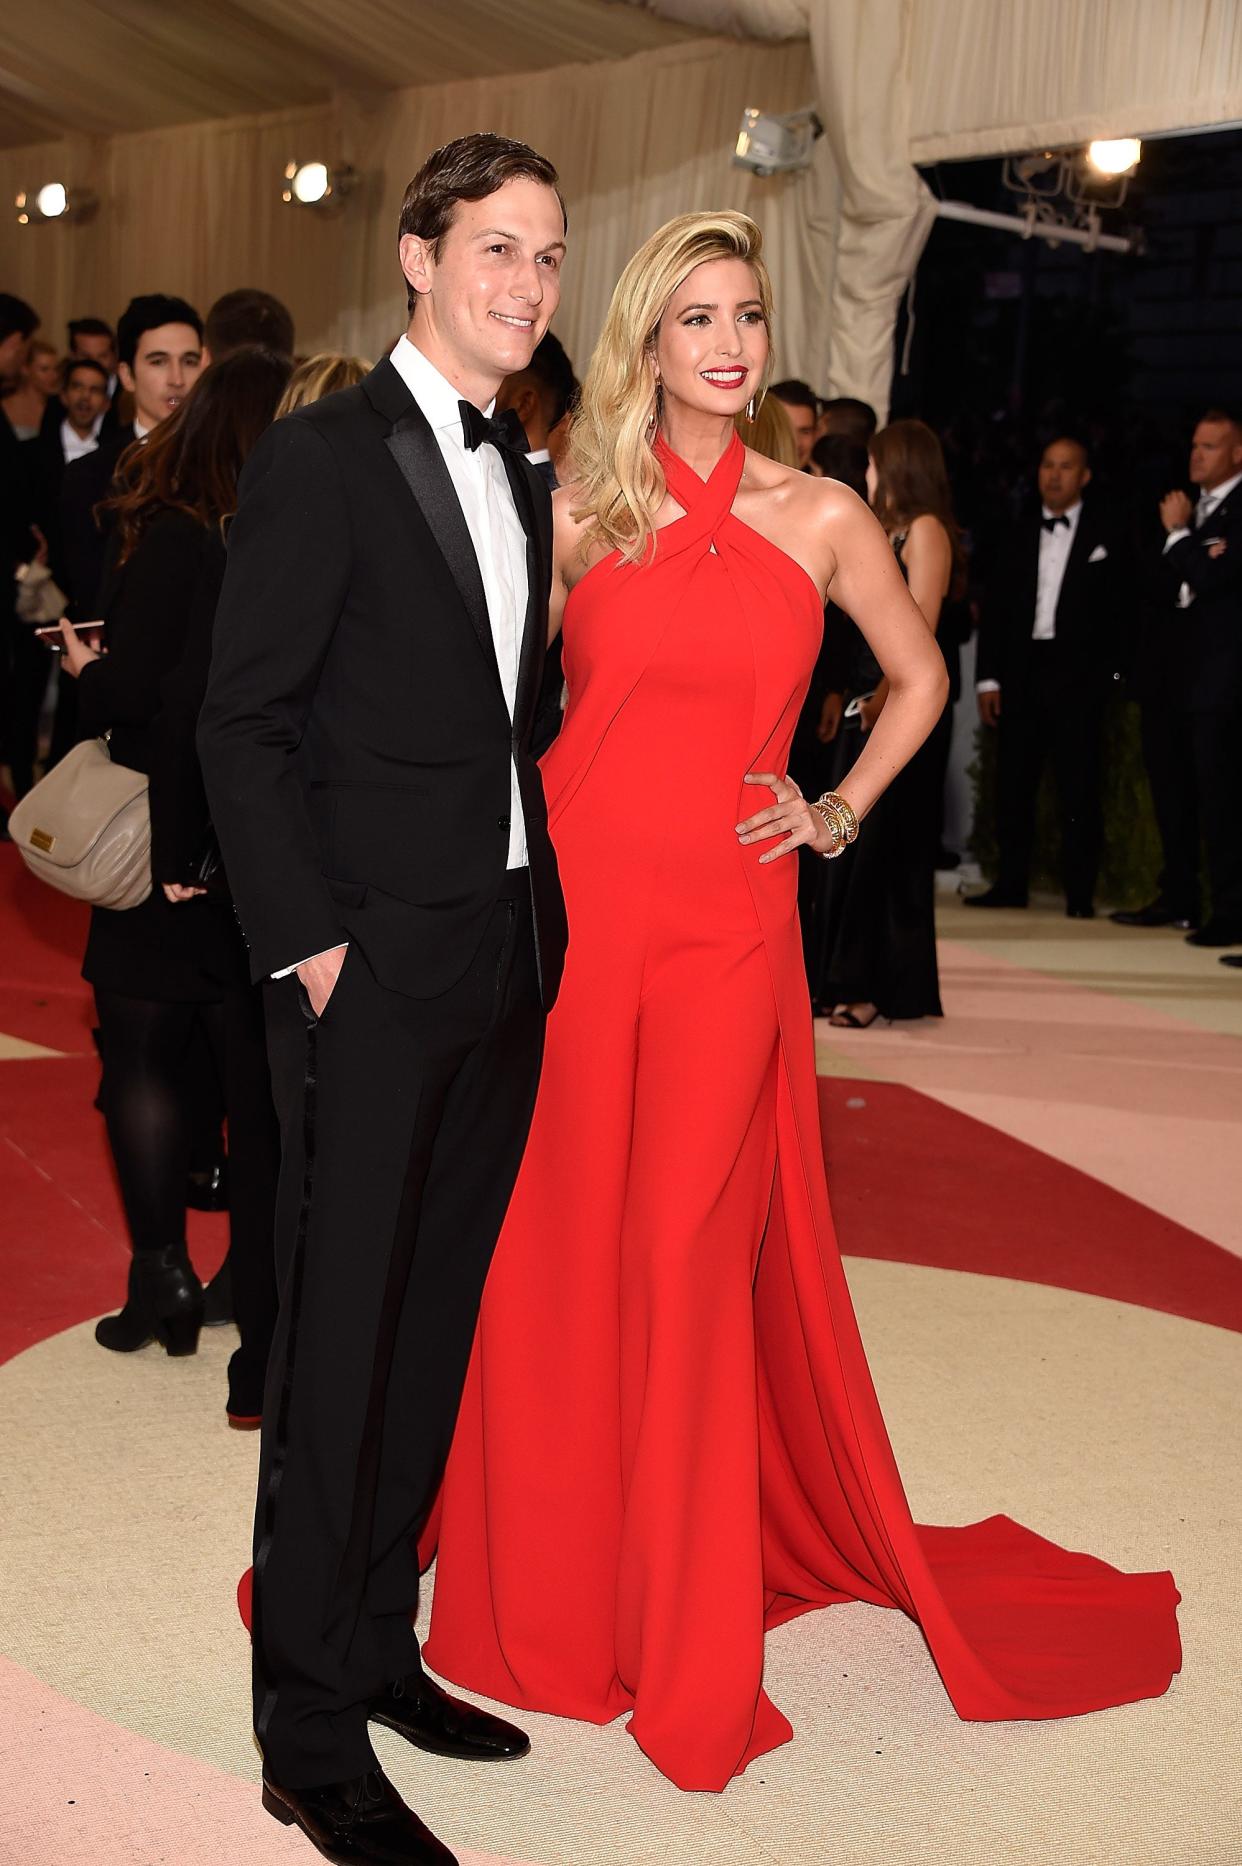 Ivanka Trump and Jared Kushner at the Met Gala in 2016